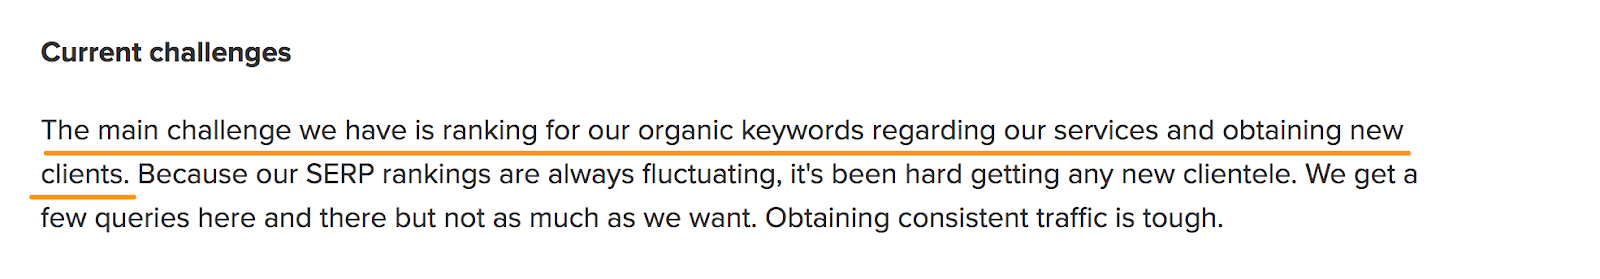 Current challenges: ranking organic keywords